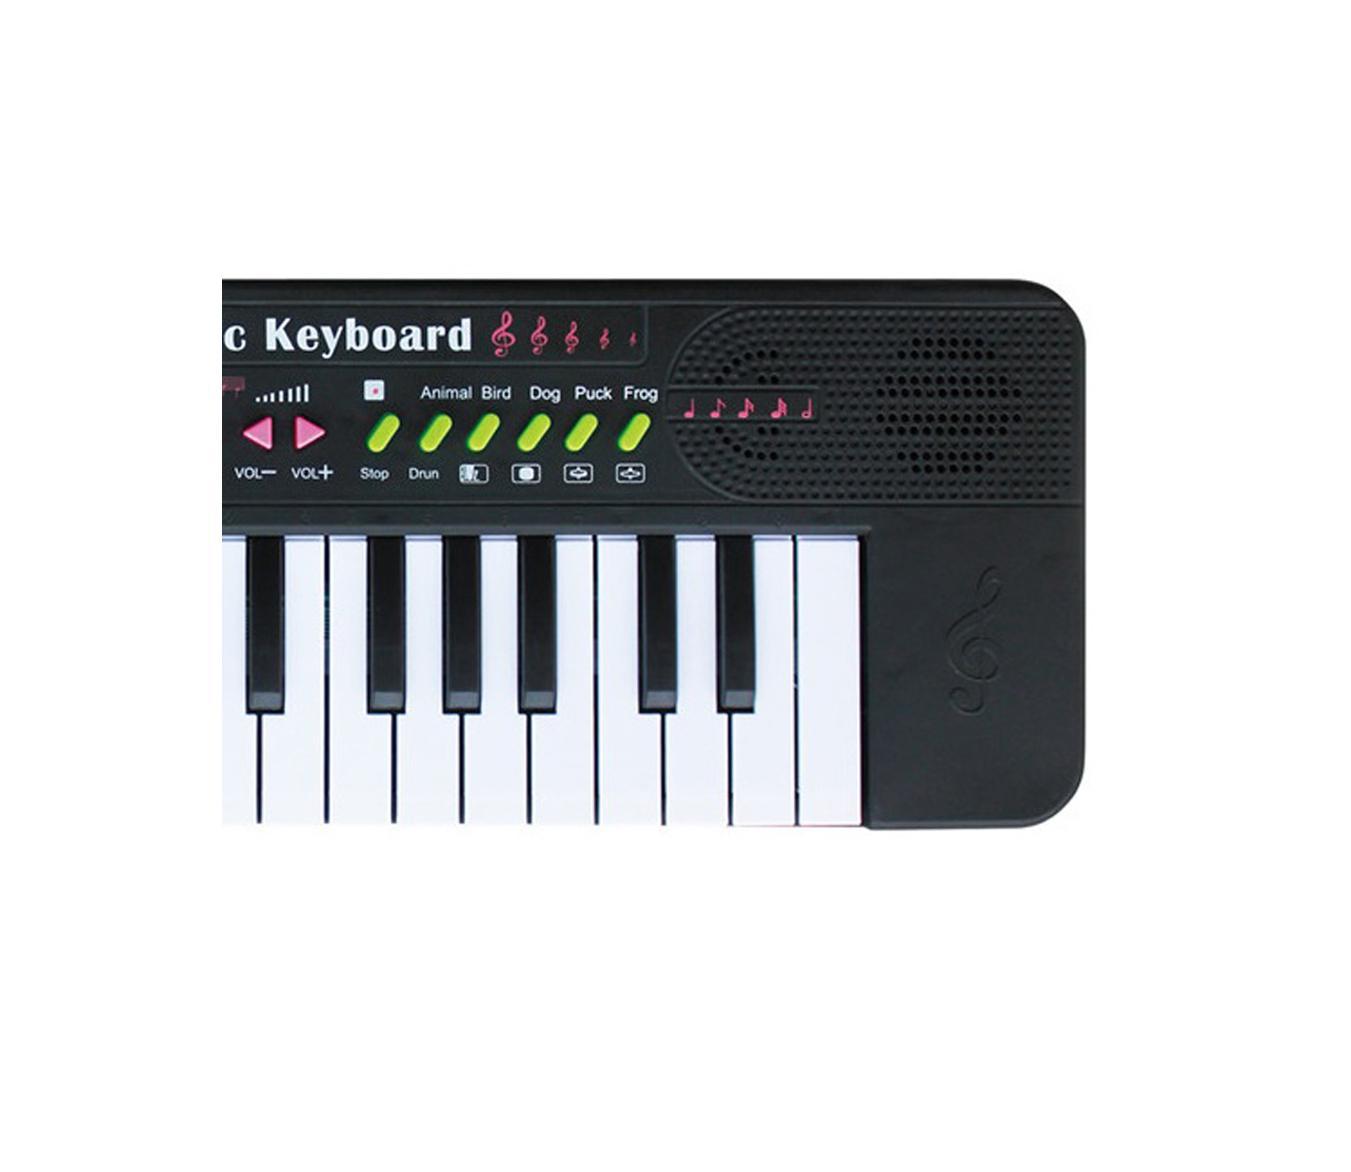 Teclado Infantil Musical 32 Teclas Keys Com Microfone Piano na